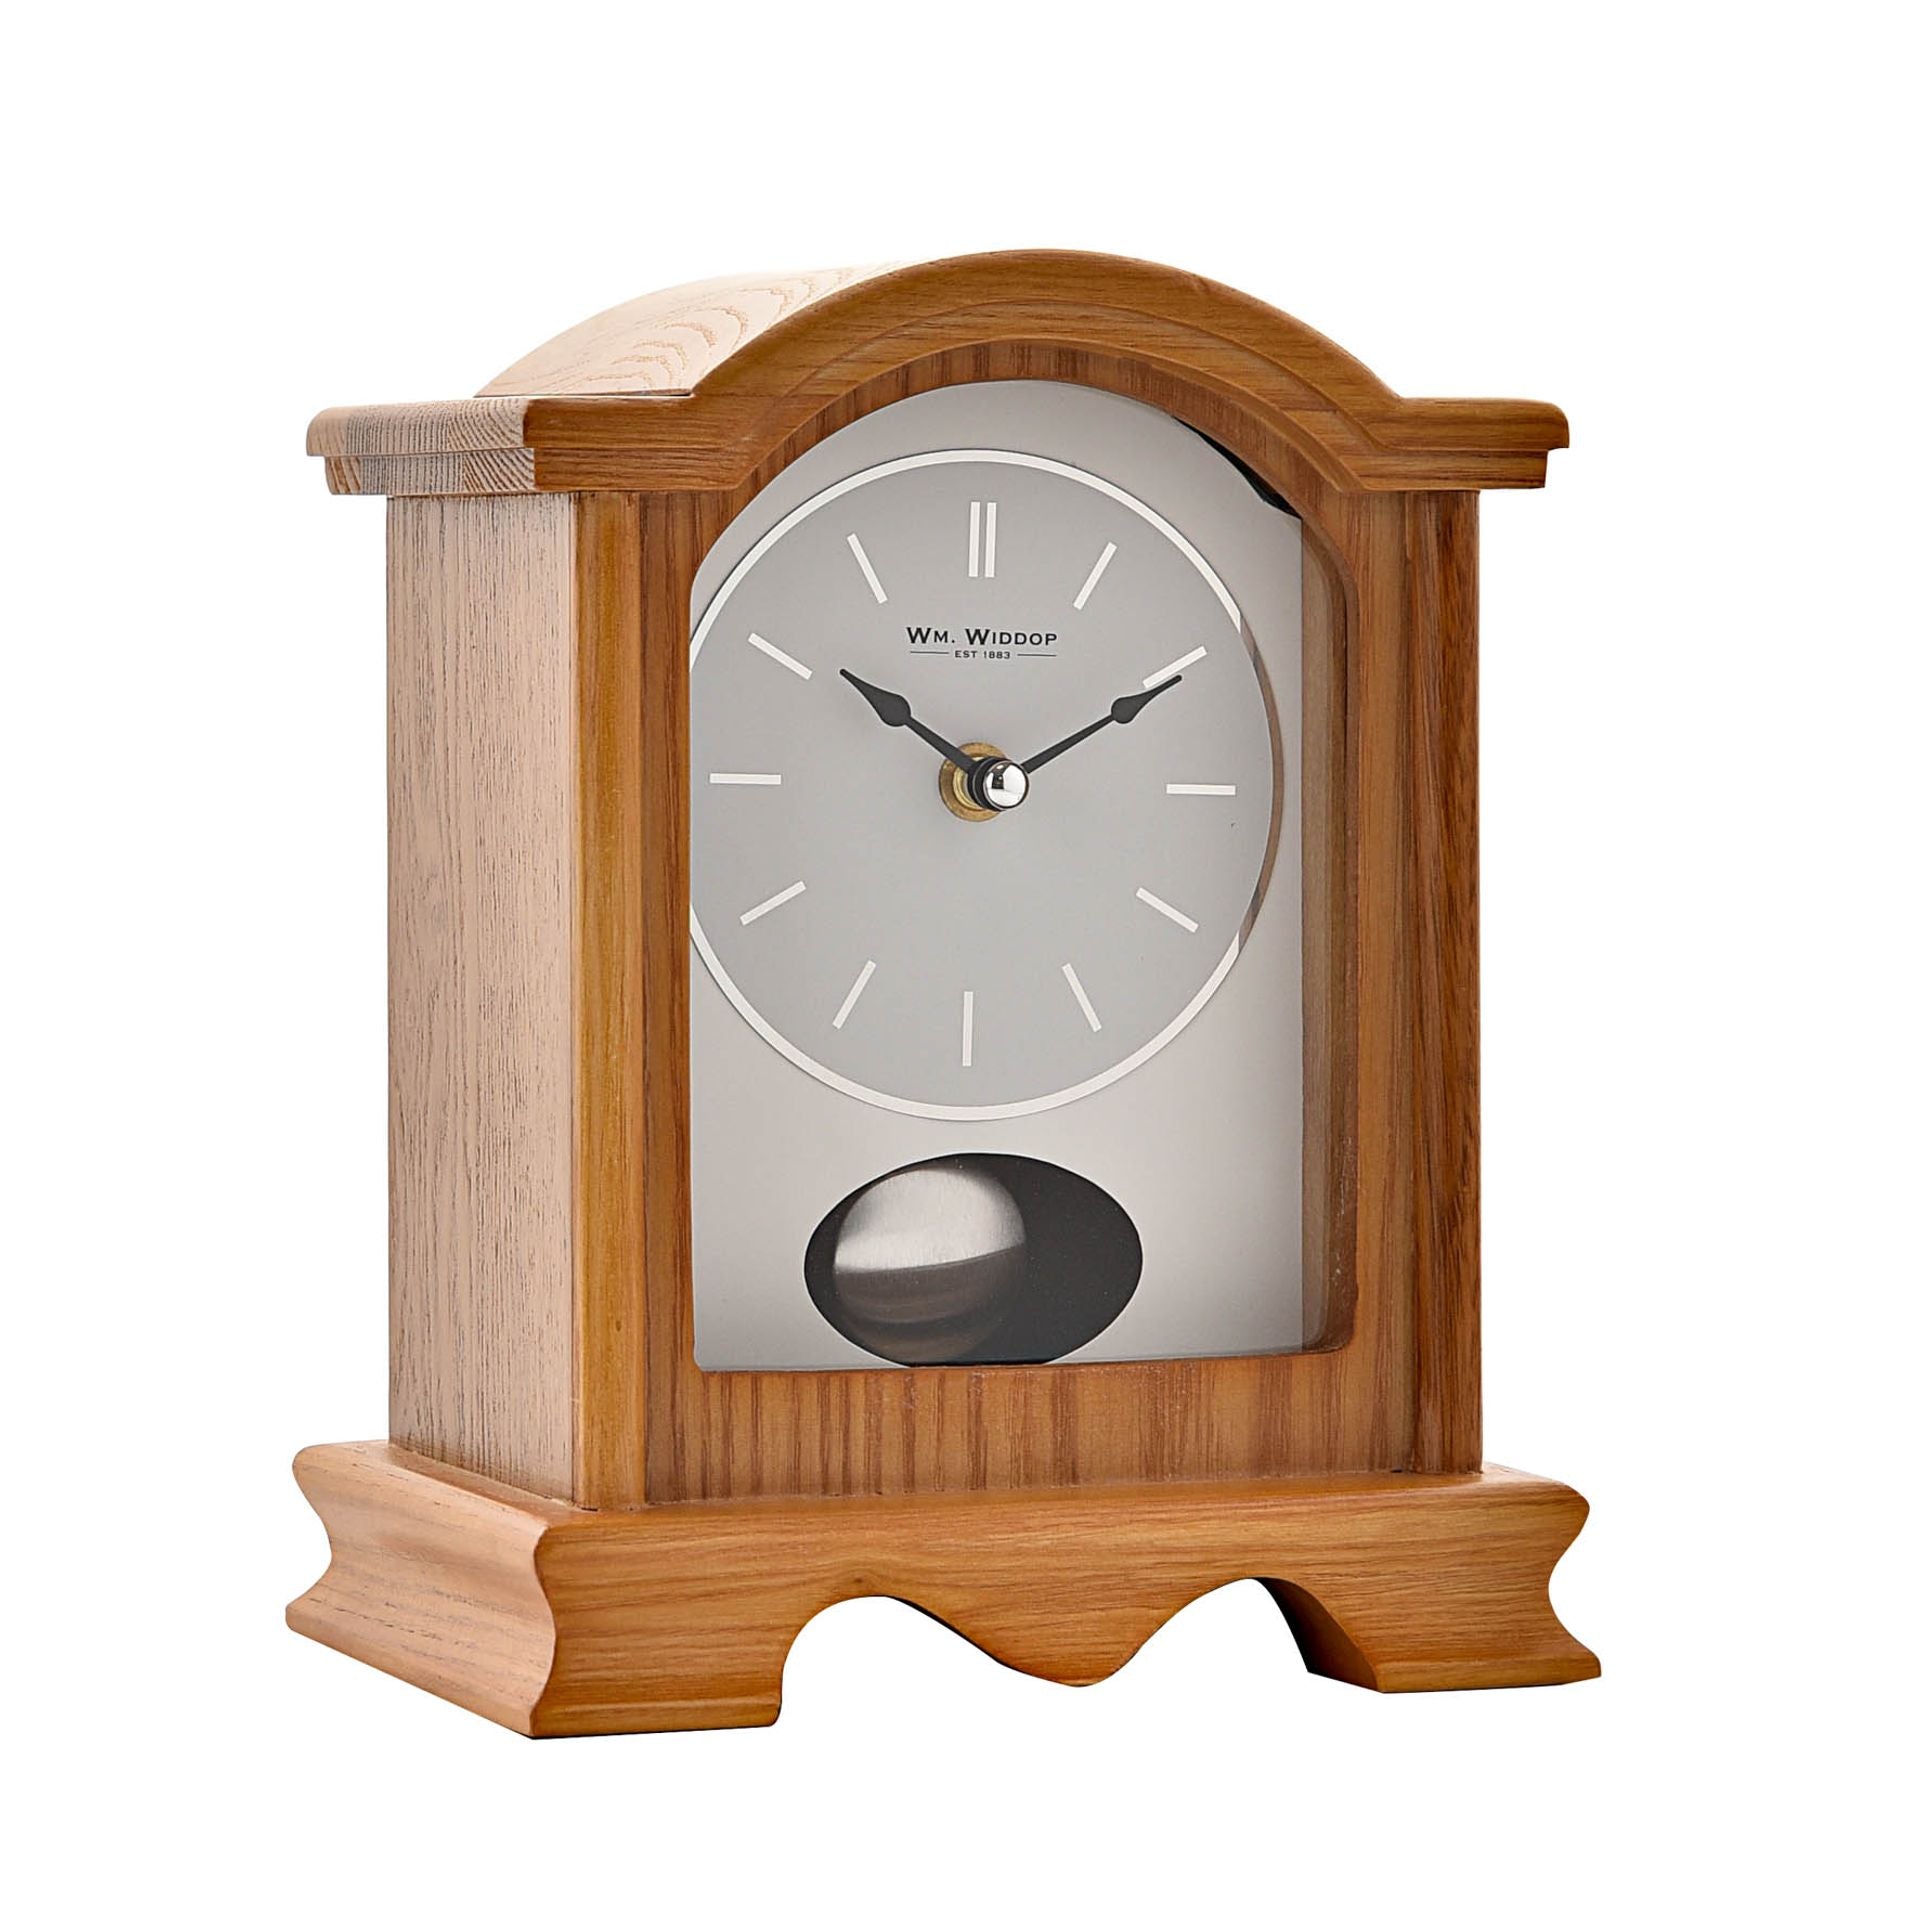 WM. Widdop Broken Arch Oak Finish Wooden Mantel Clock with Pendulum